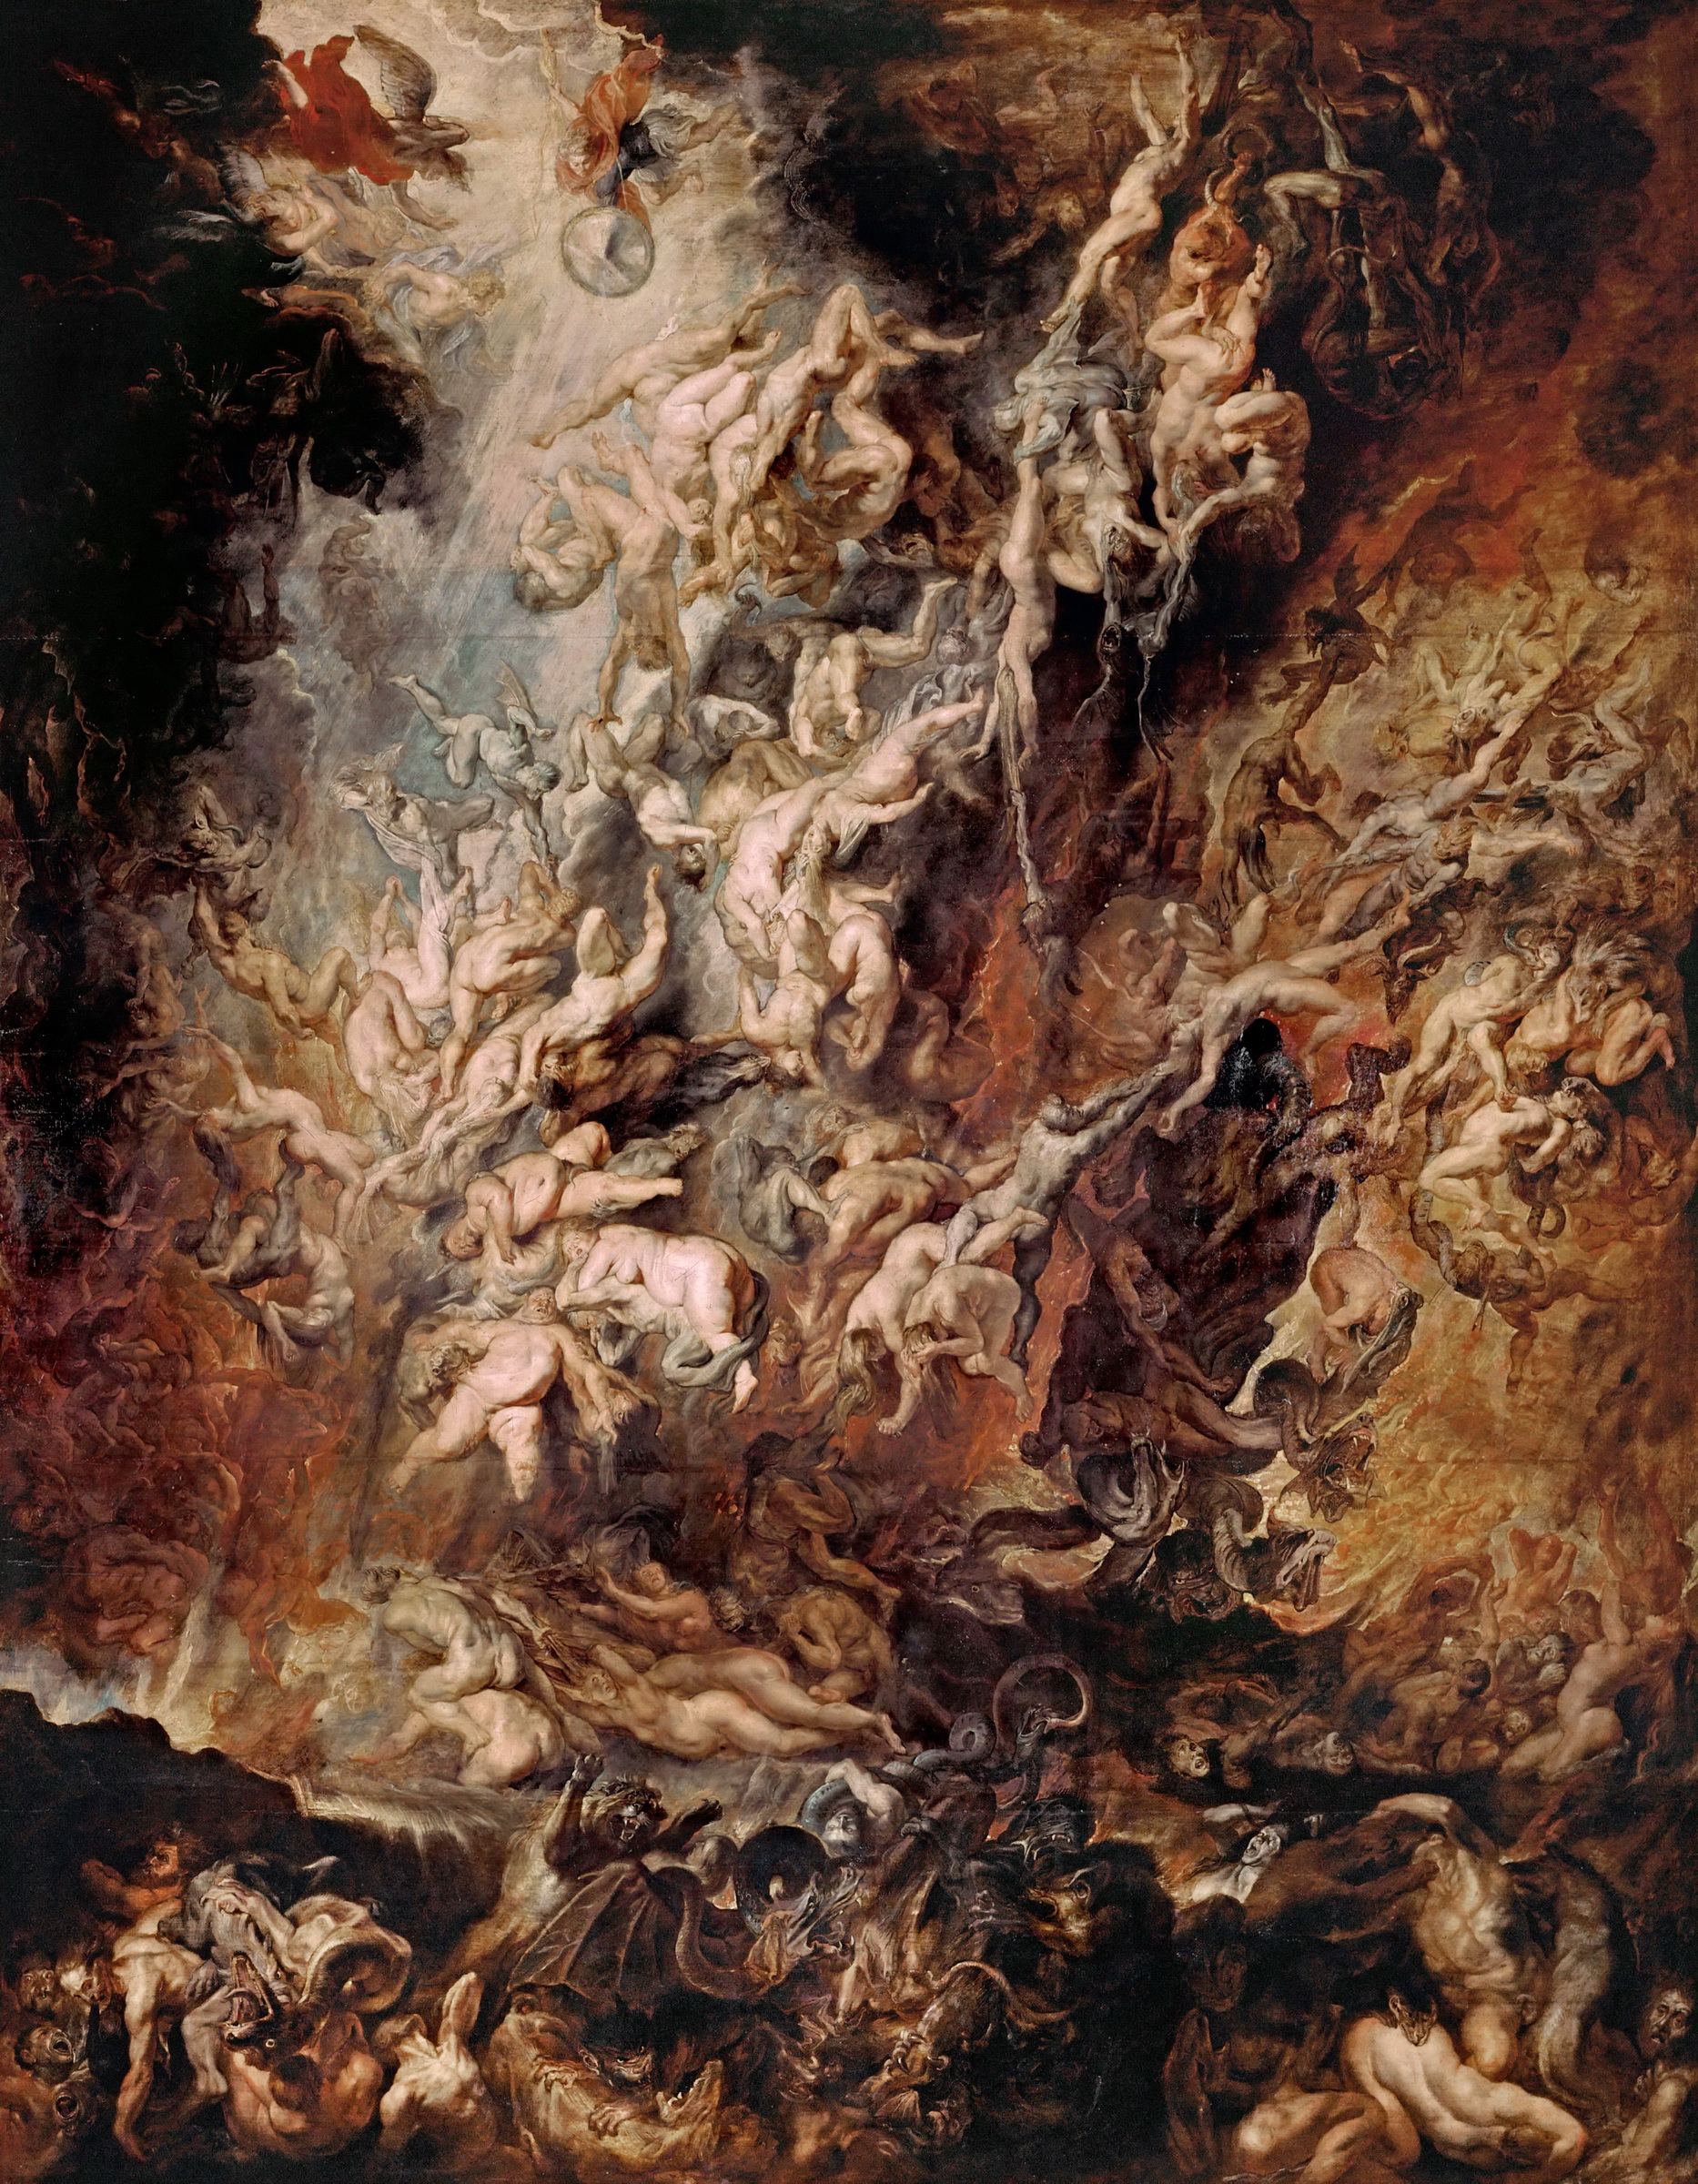 سقوط الملعونون by Peter Paul Rubens - 1620 - الأبعاد: 2,86 × 2,24 م 